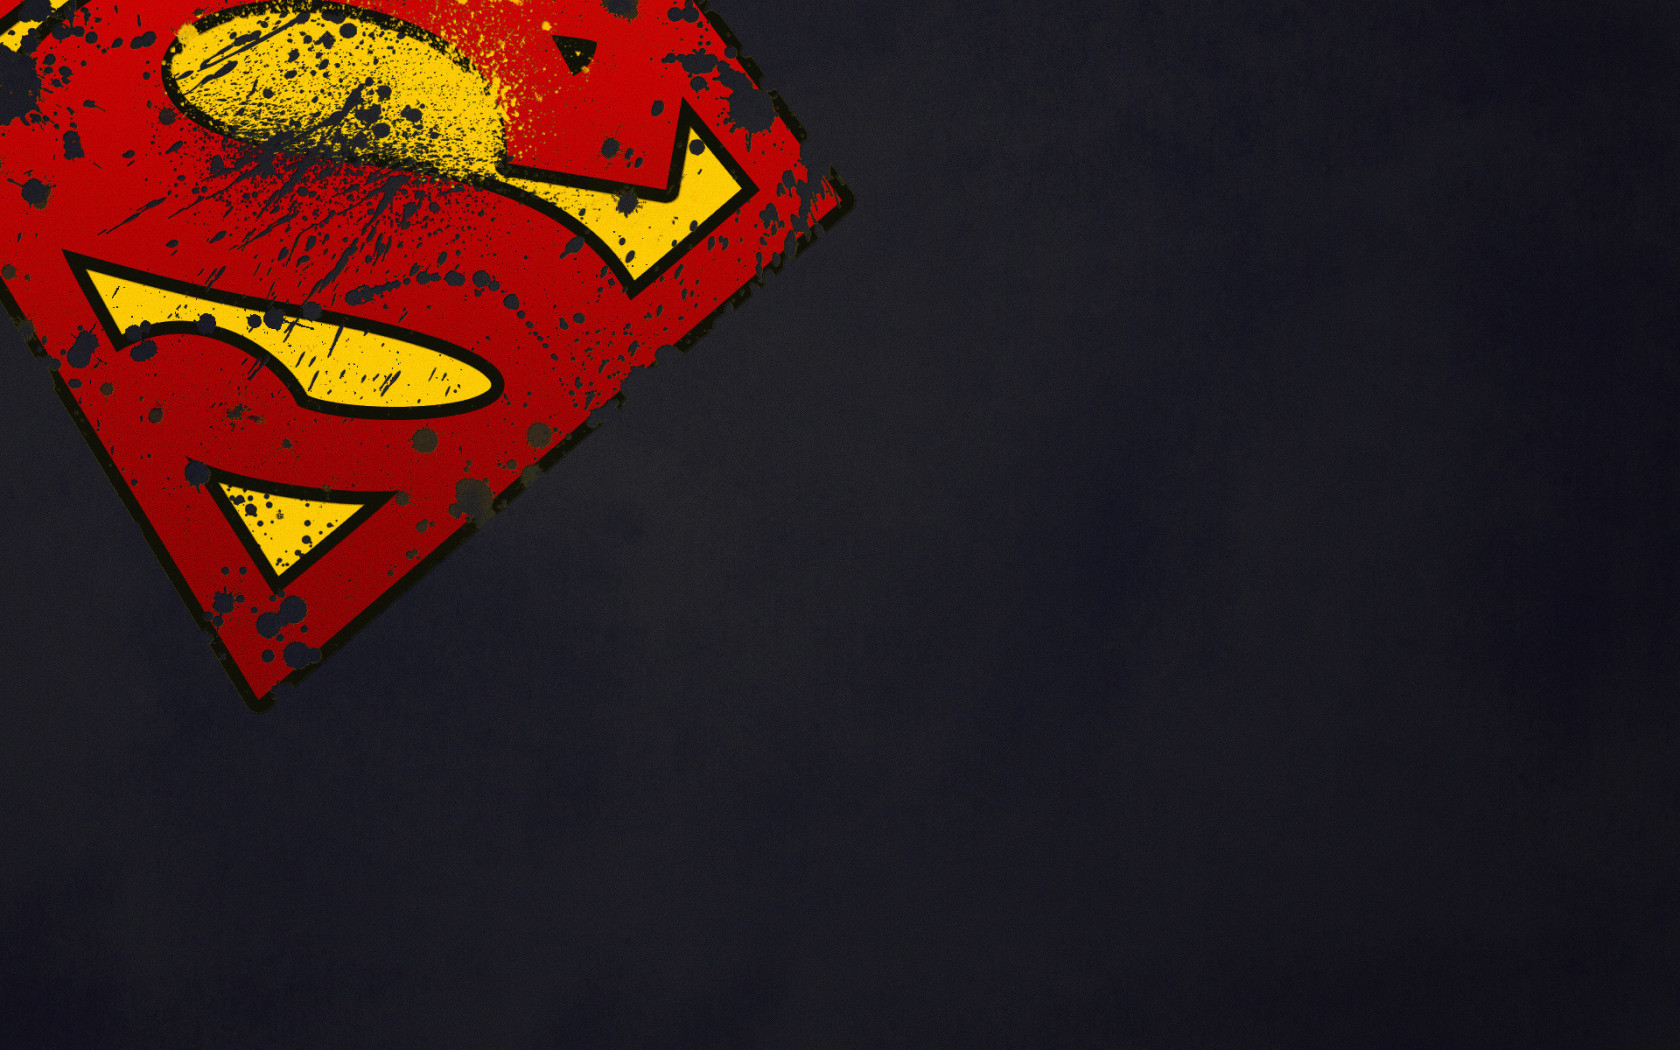 Superman Logo Desktop Wallpaper